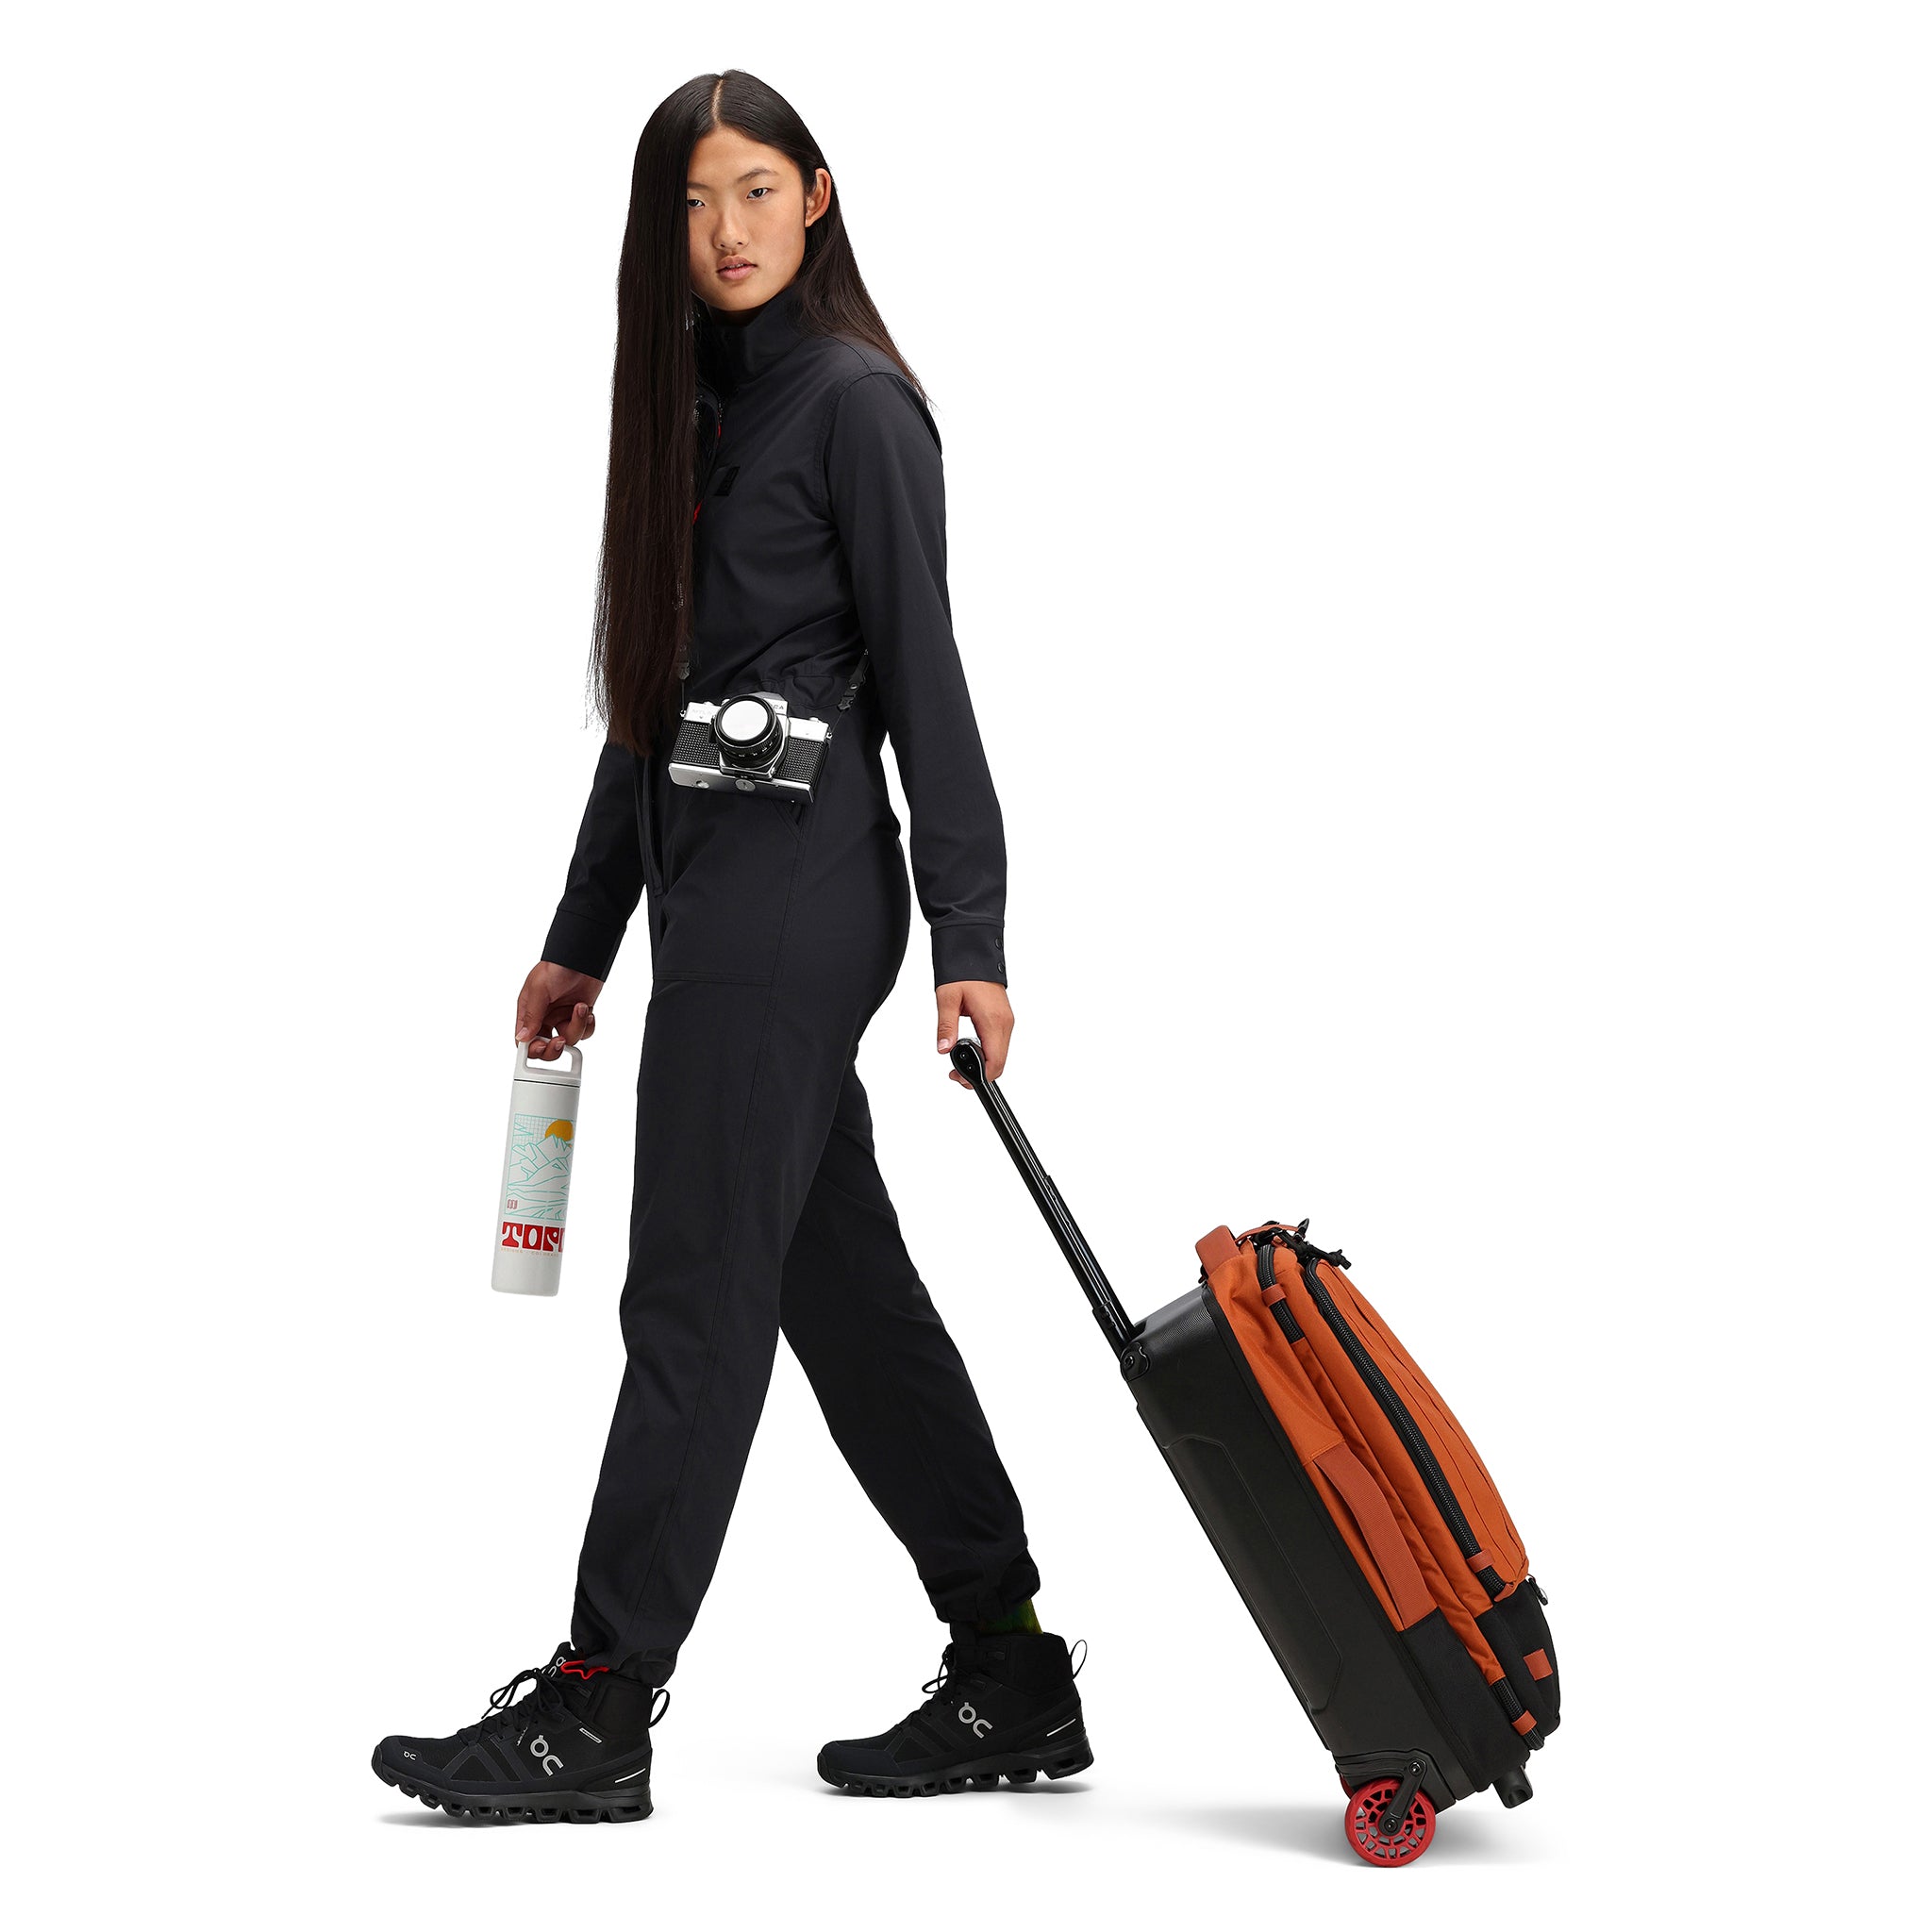 Topo Designs | Global Travel Bag Roller, Navy